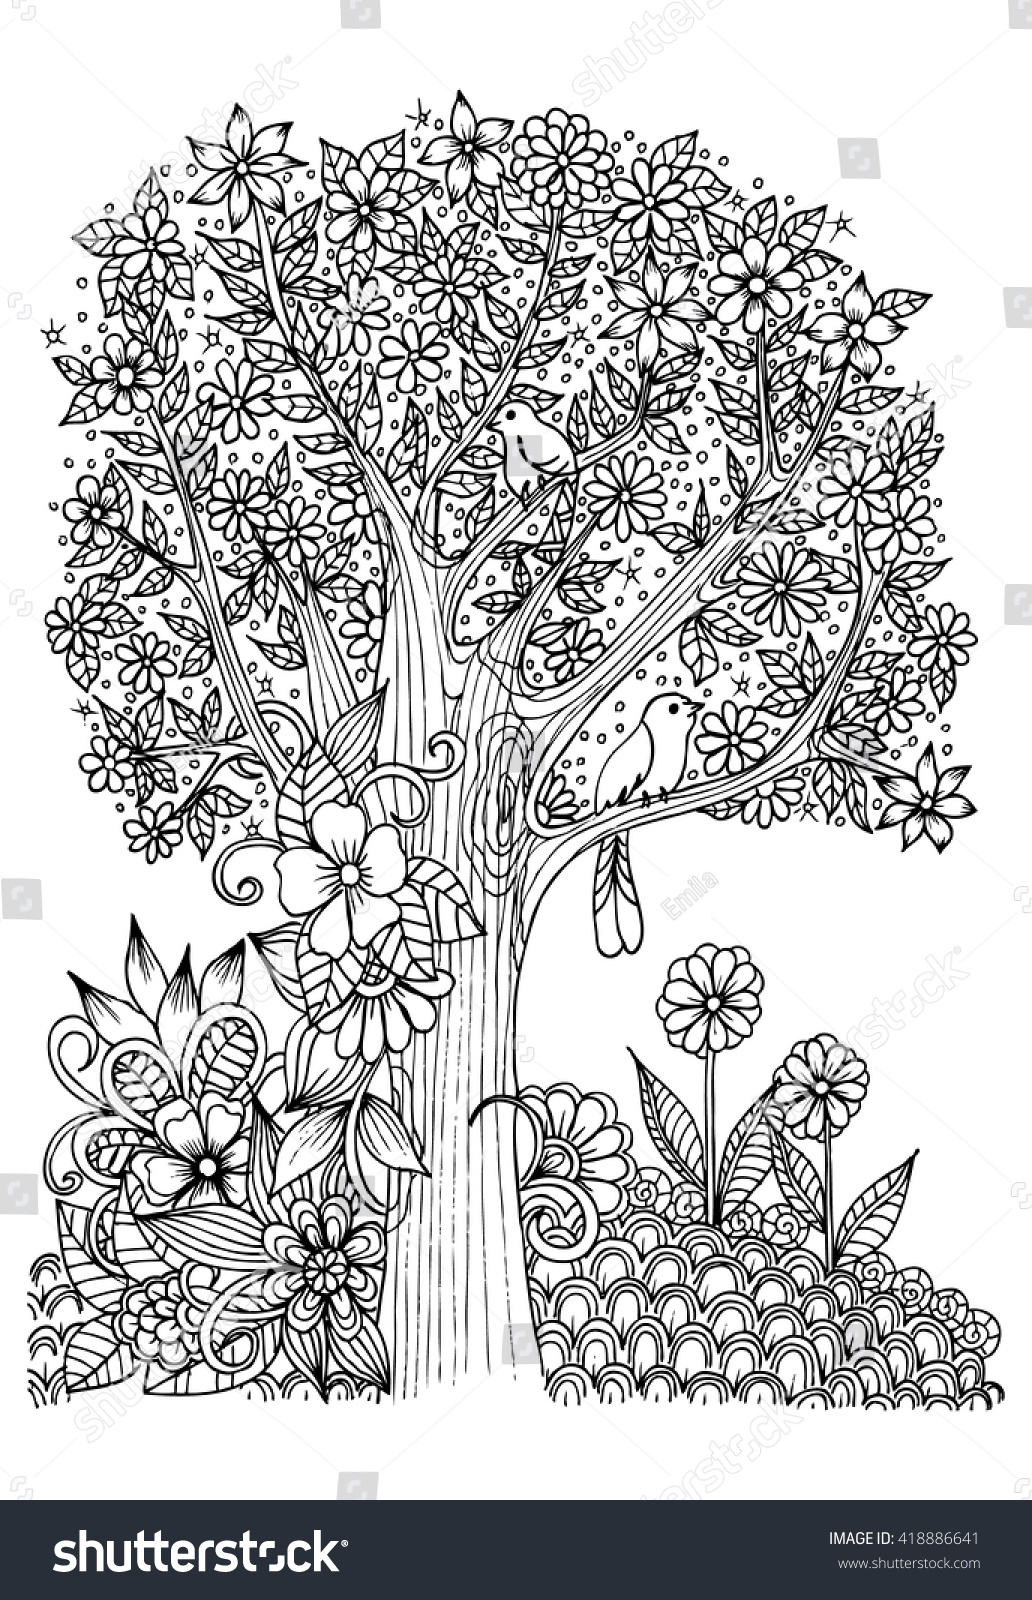 Flowers Black White Tree Birds Doodle Stock Vector Royalty Free